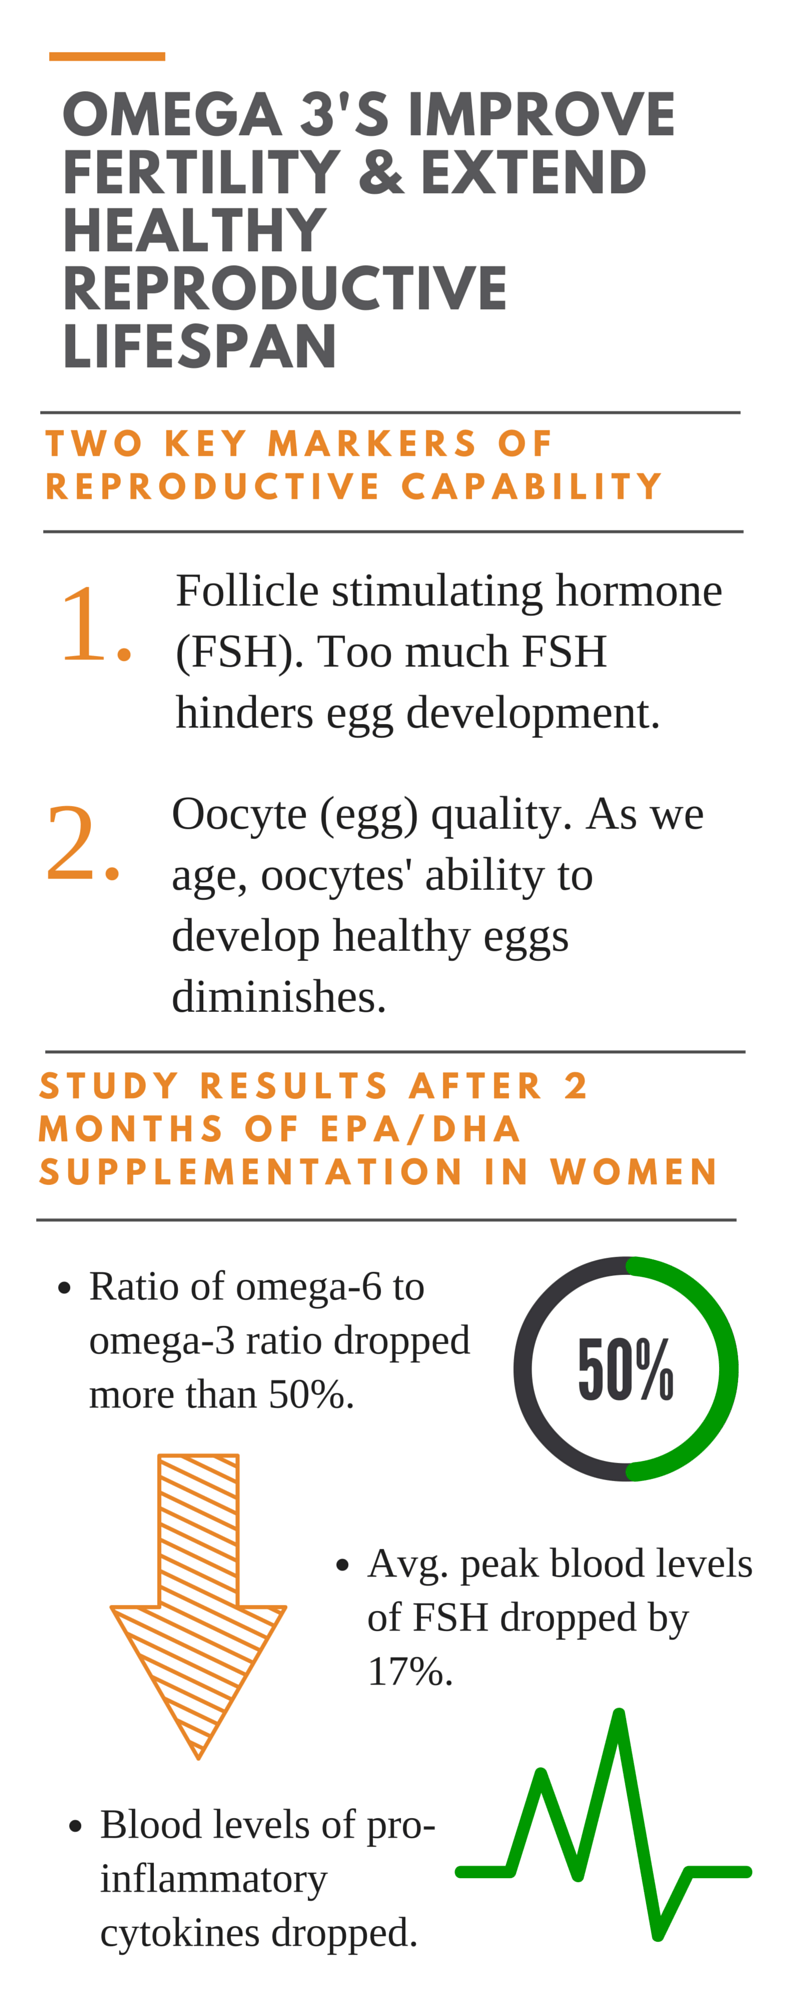 Omega 3's Improve Fertility & Extend Healthy Reproductive Lifestpan (1)